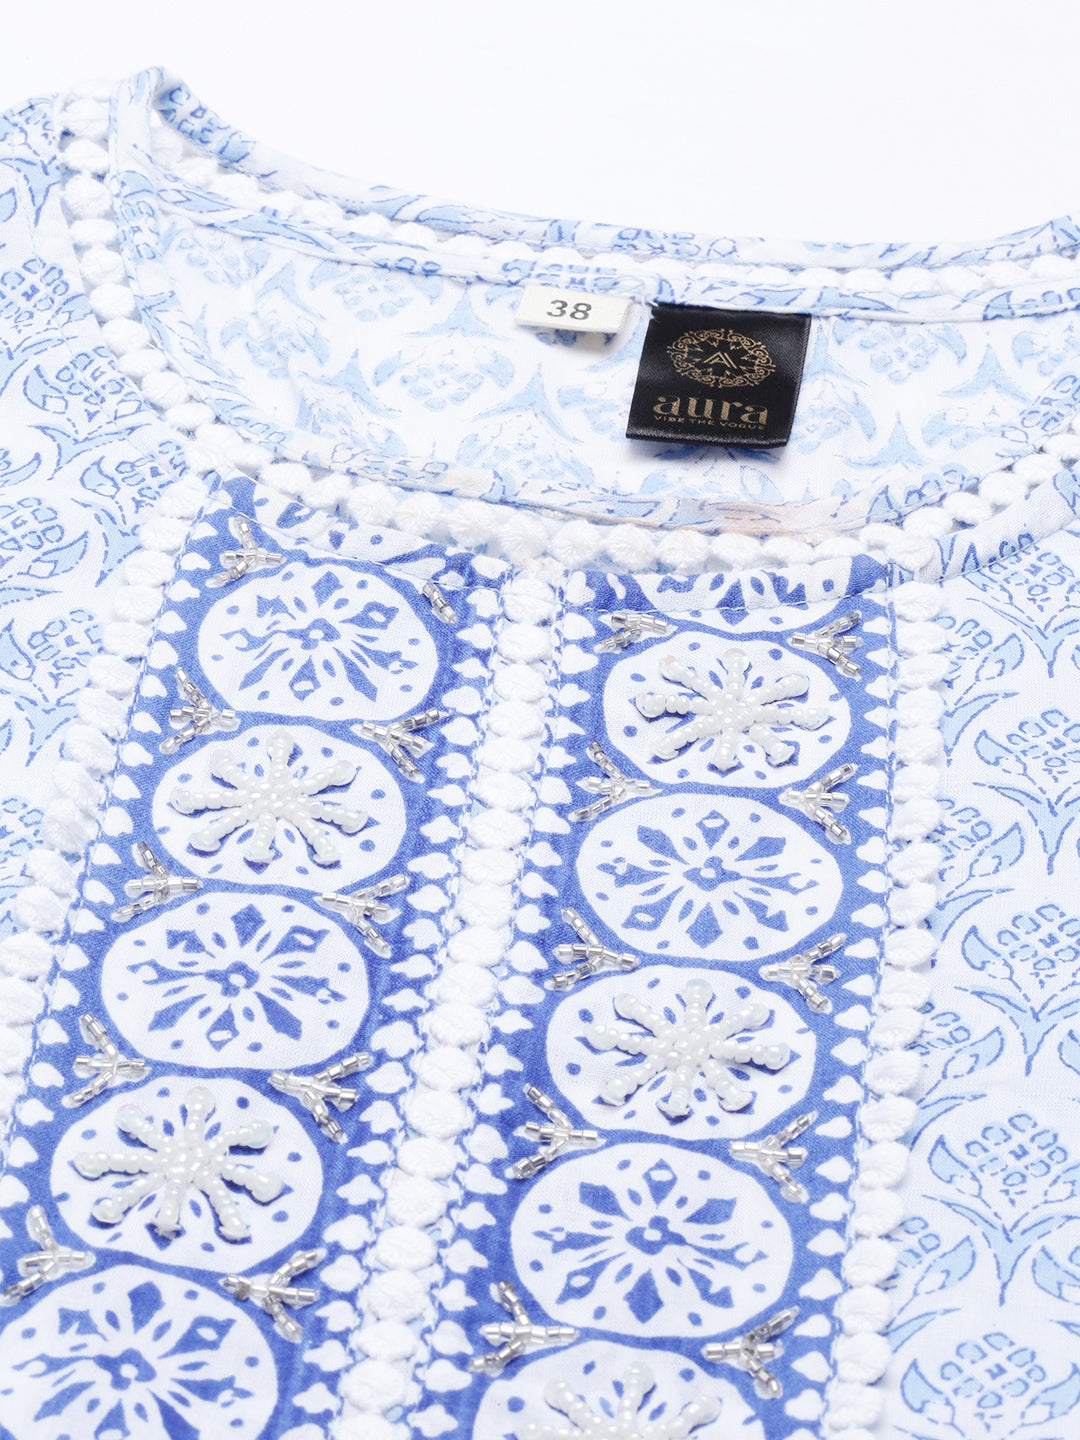 Neeru'S Blue Color, Cotton Fabric Tunic